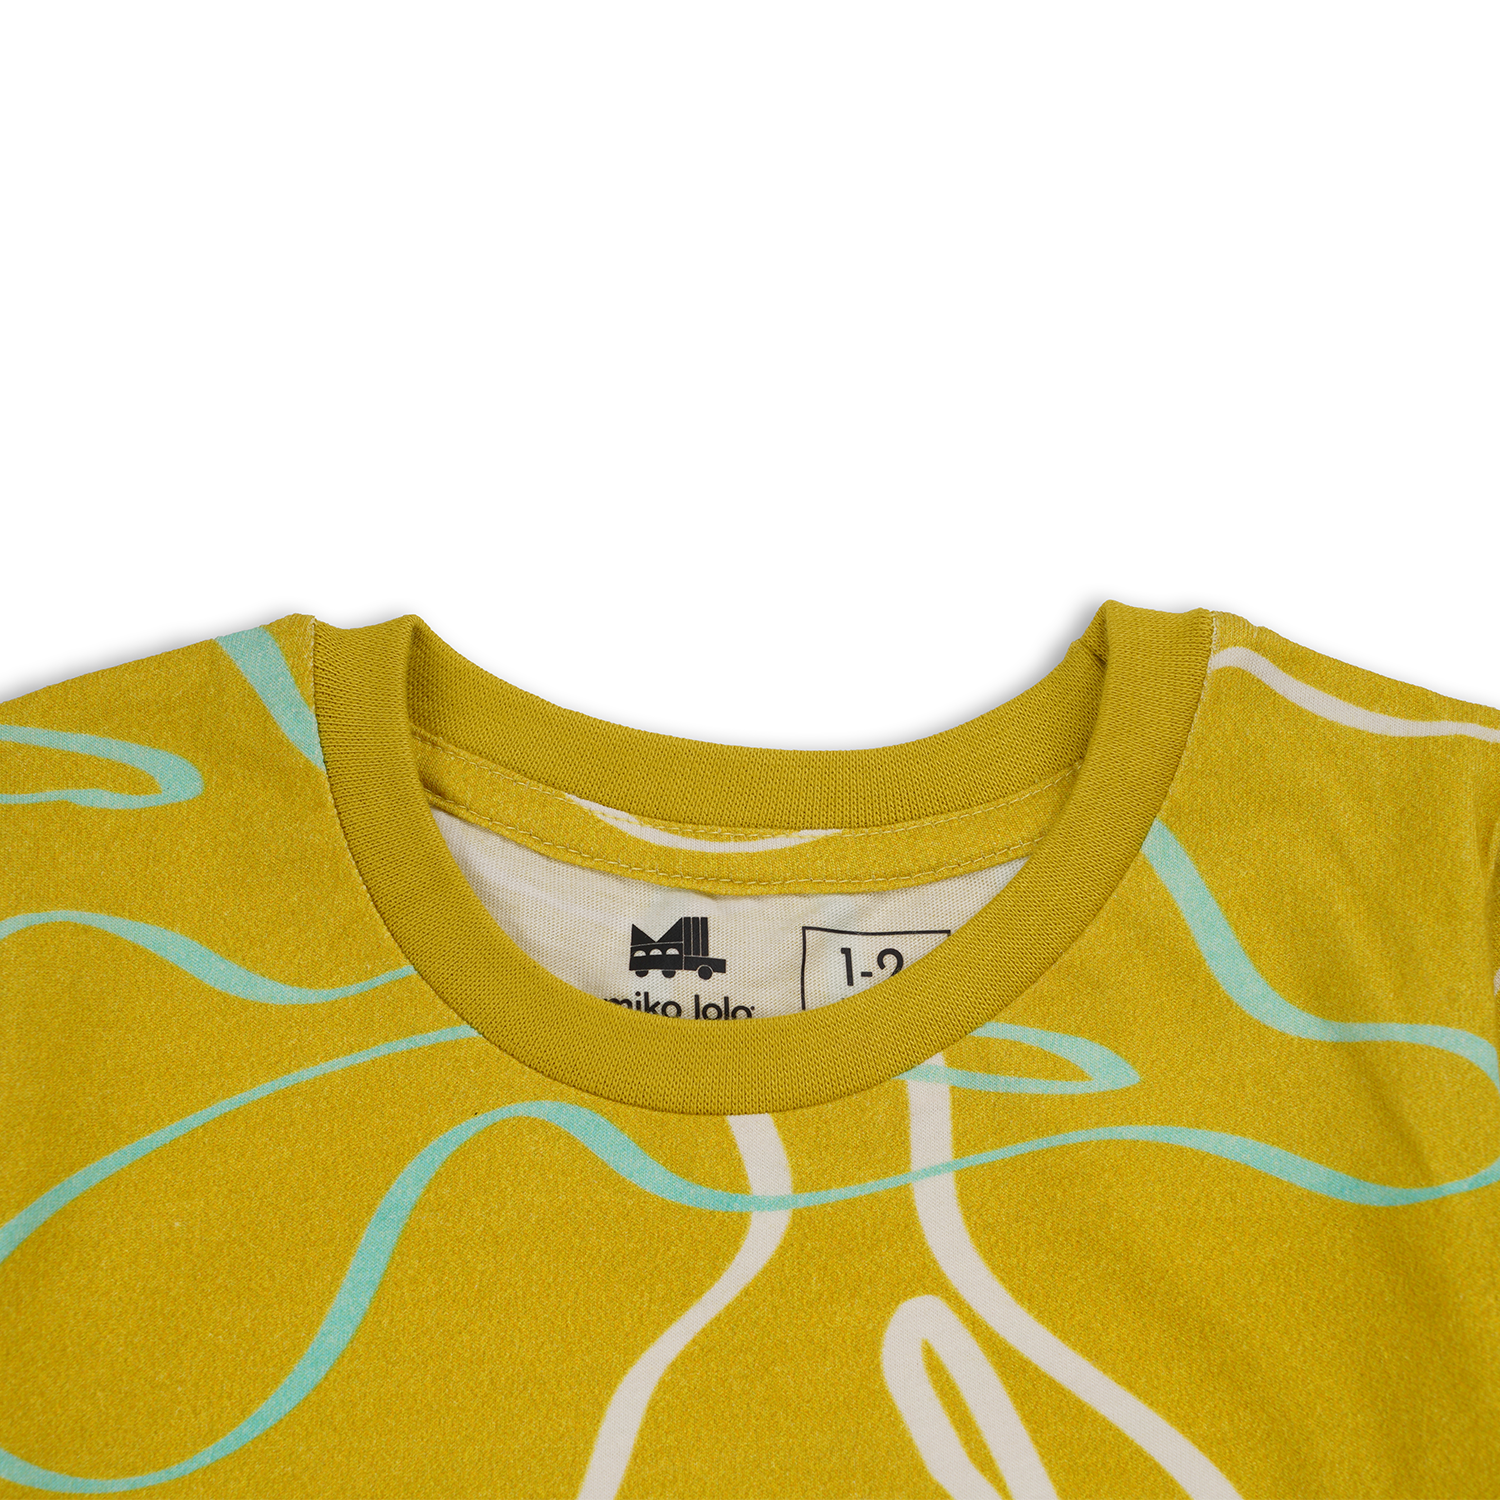 Reef Printed Unisex T-Shirt, Mustard